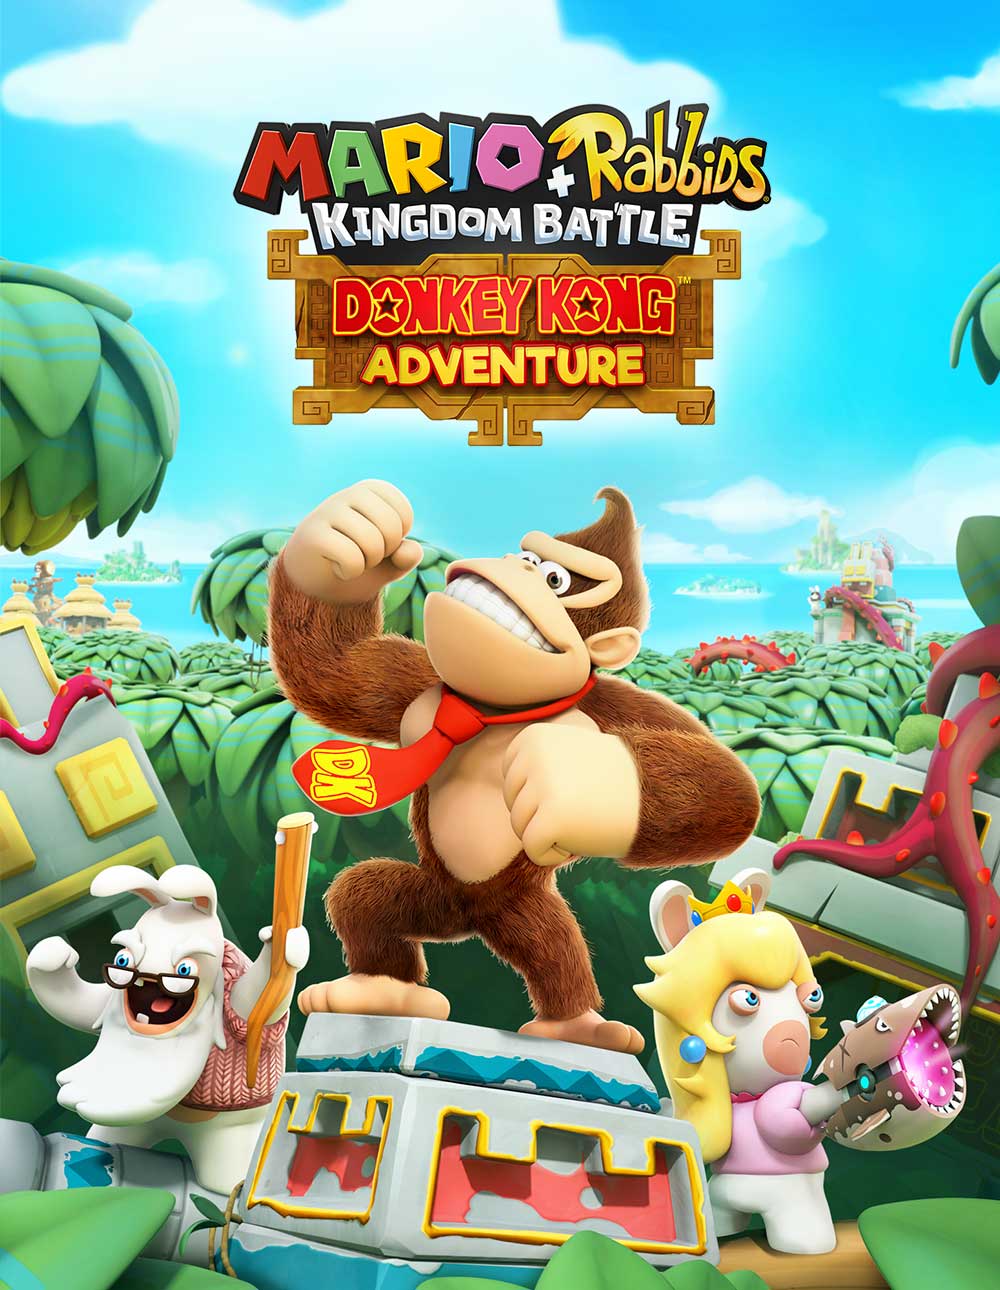 Mario rabbids kingdom battle donkey kong adventure video game